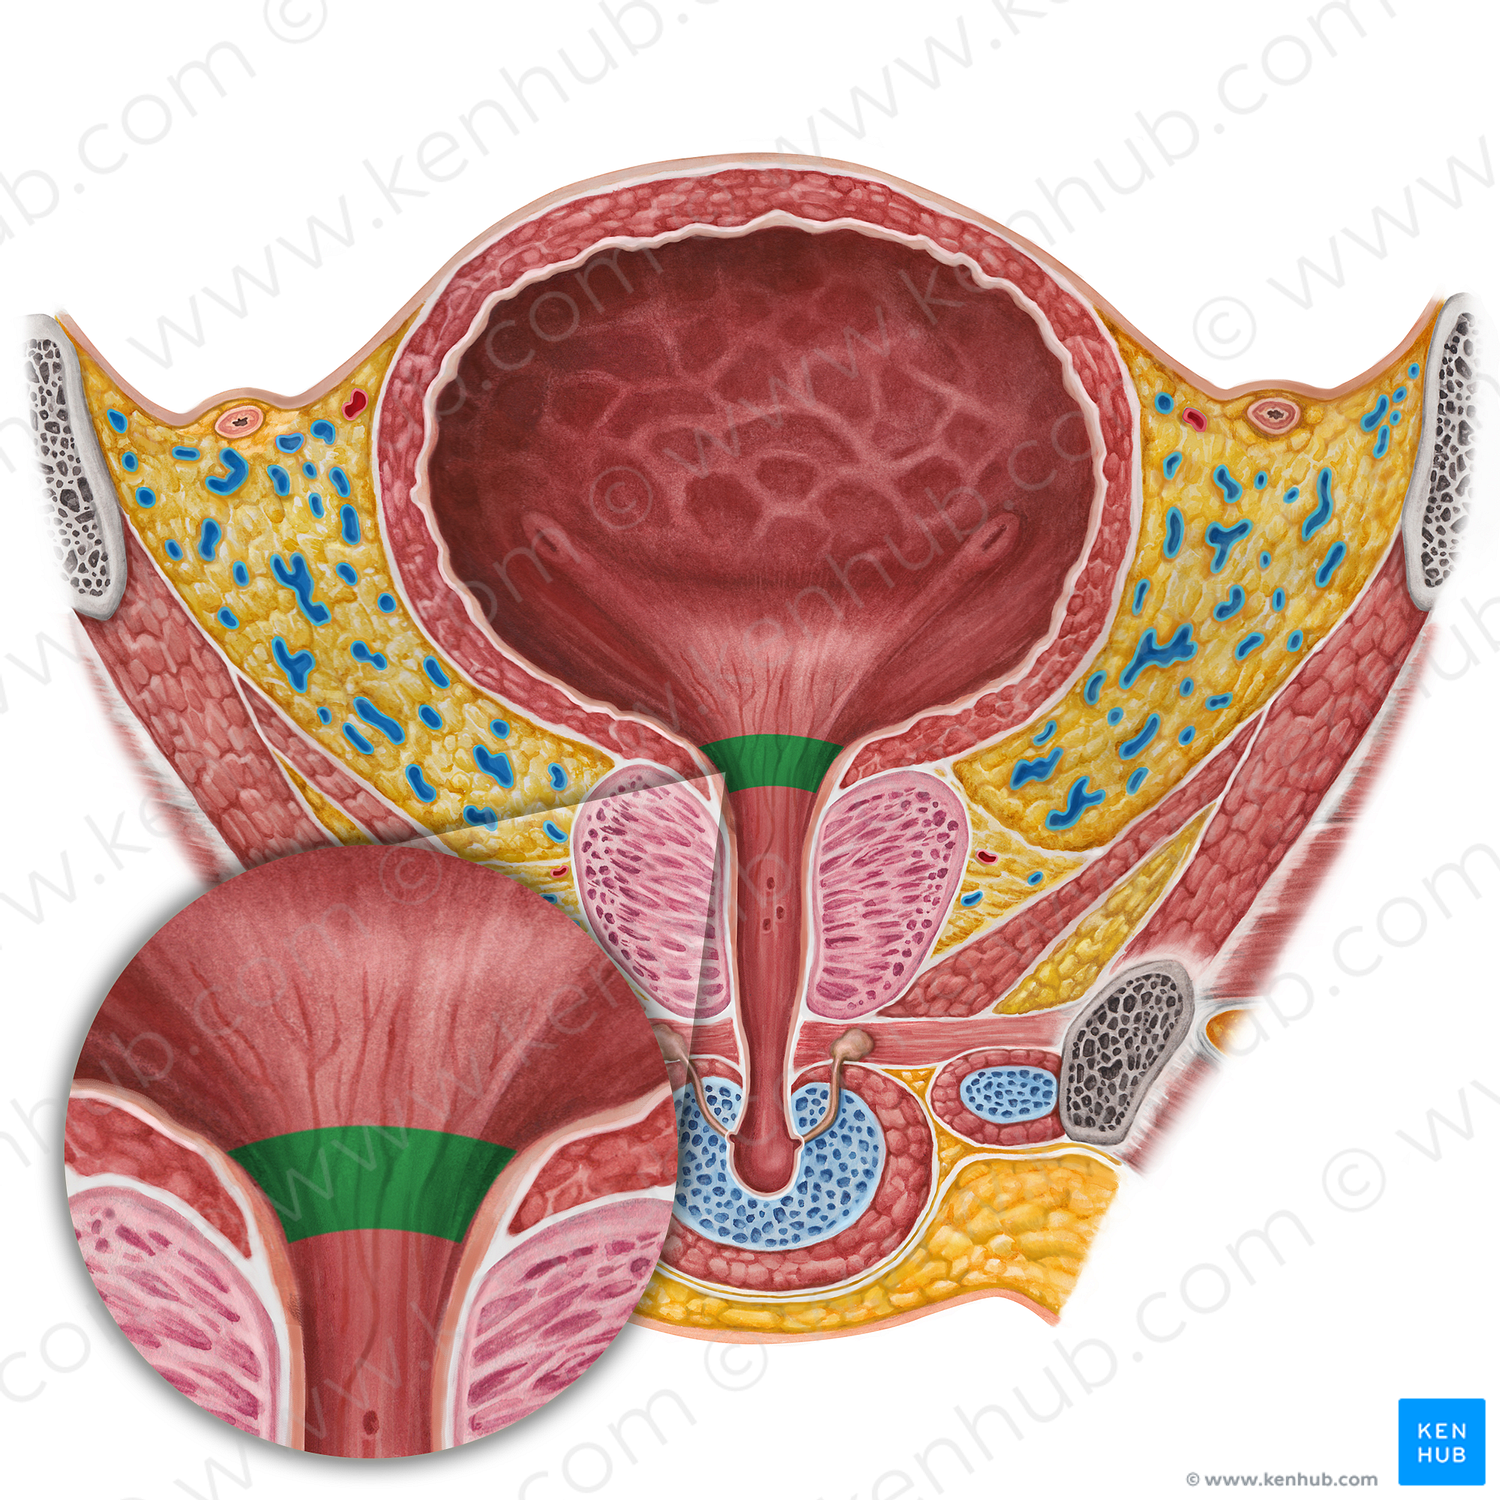 Neck of urinary bladder (#2585)